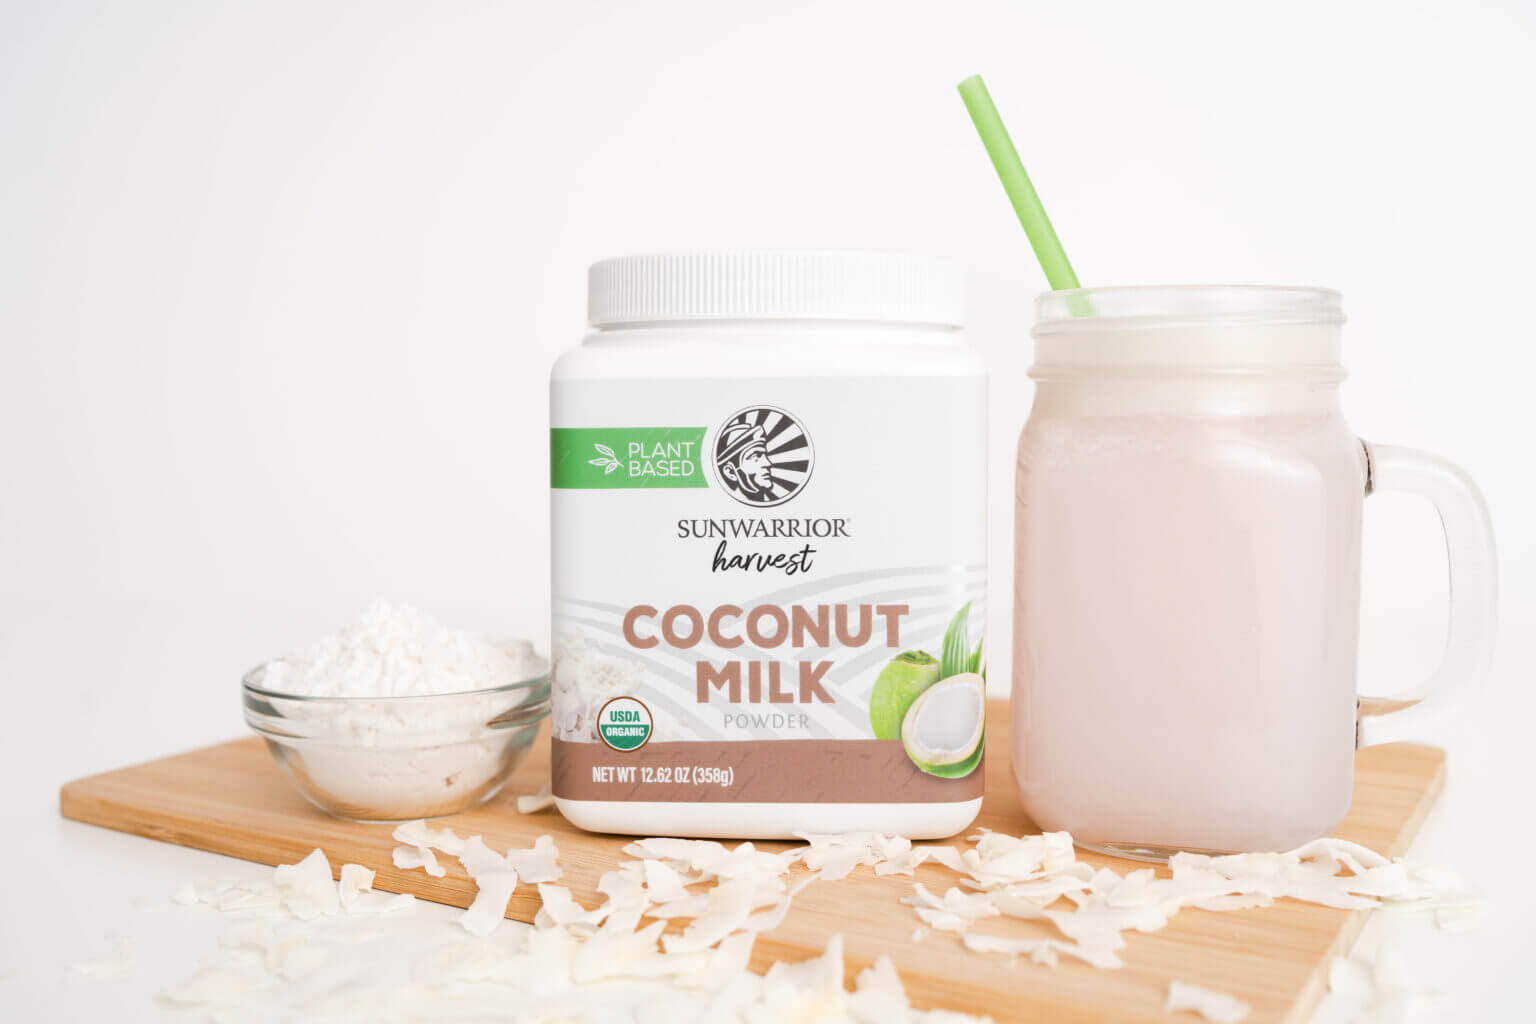 Sunwarrior ekološko kokosovo mleko uporaba